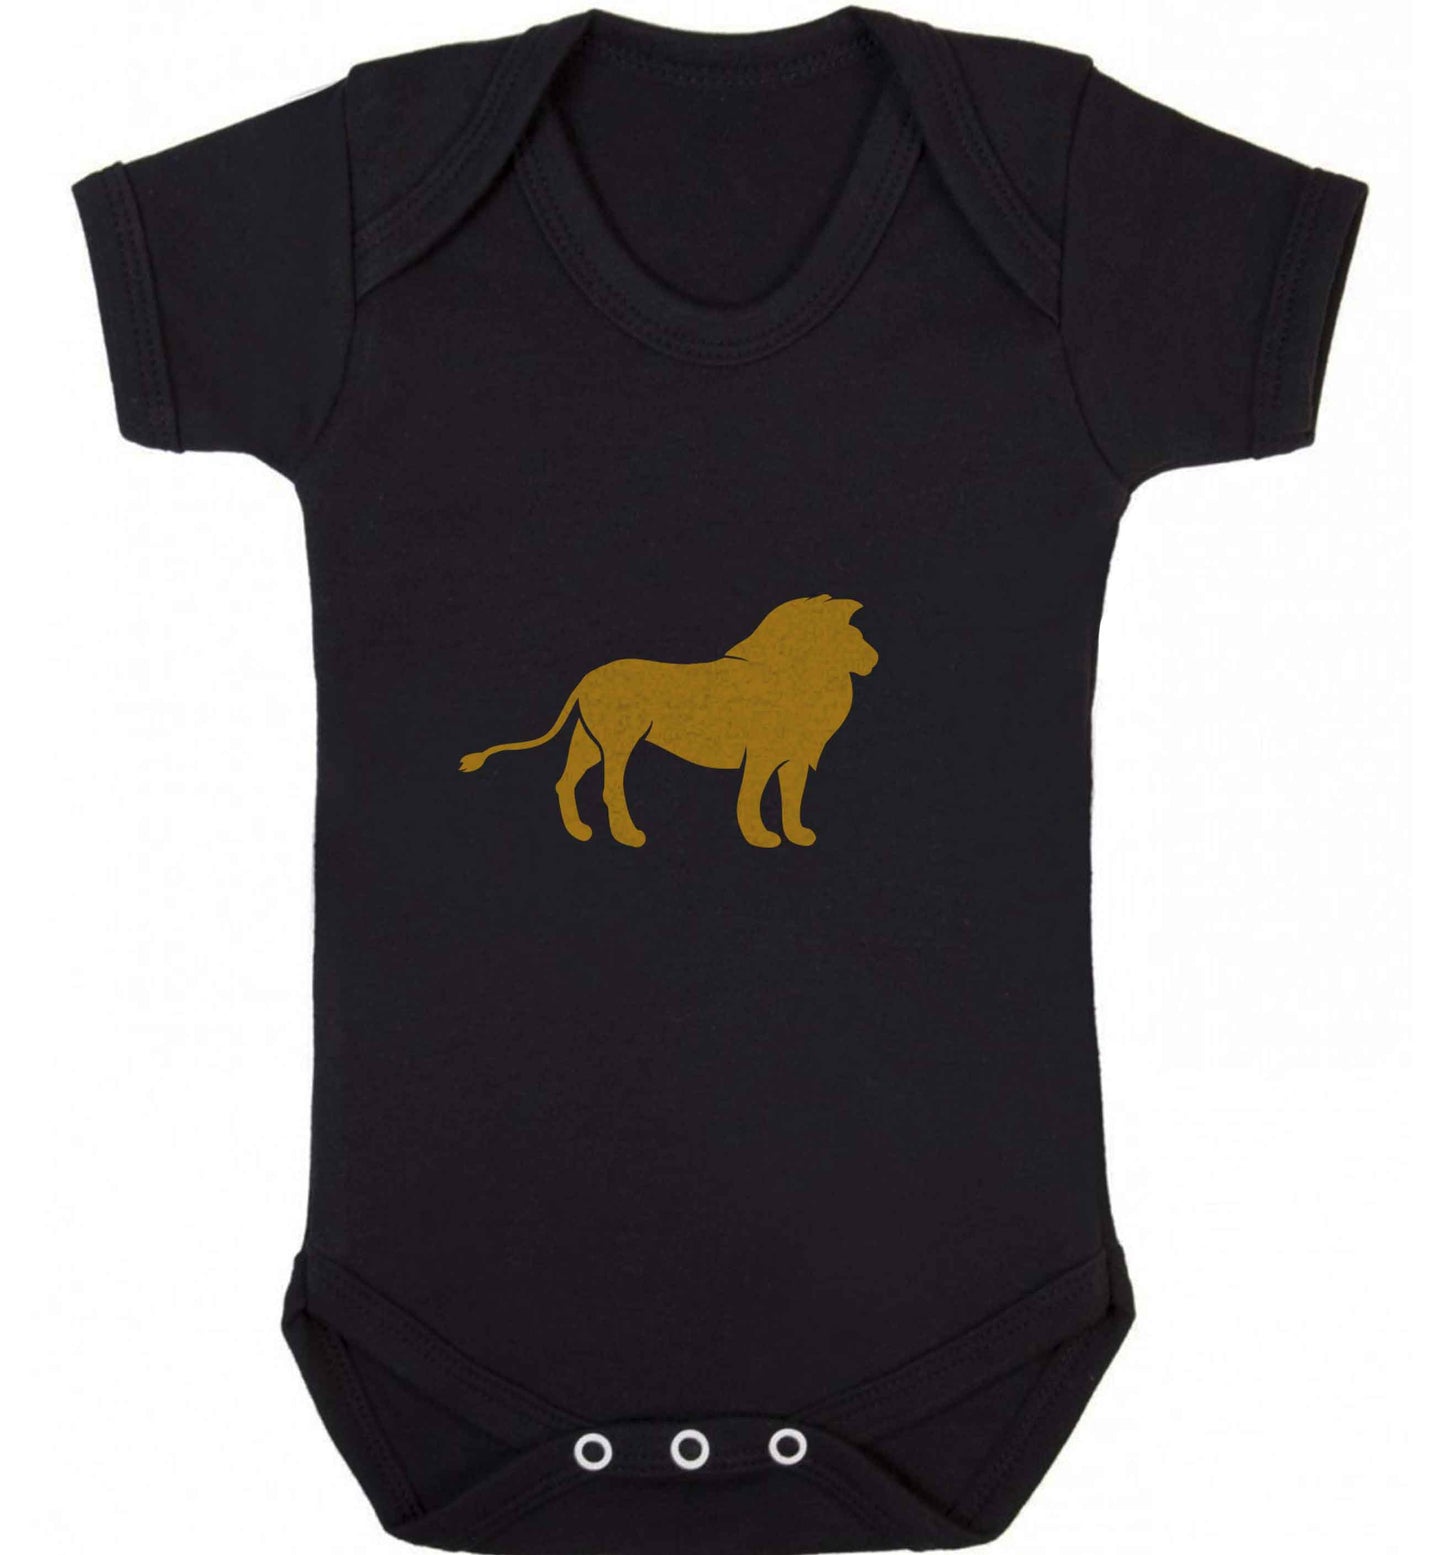 Gold lion baby vest black 18-24 months